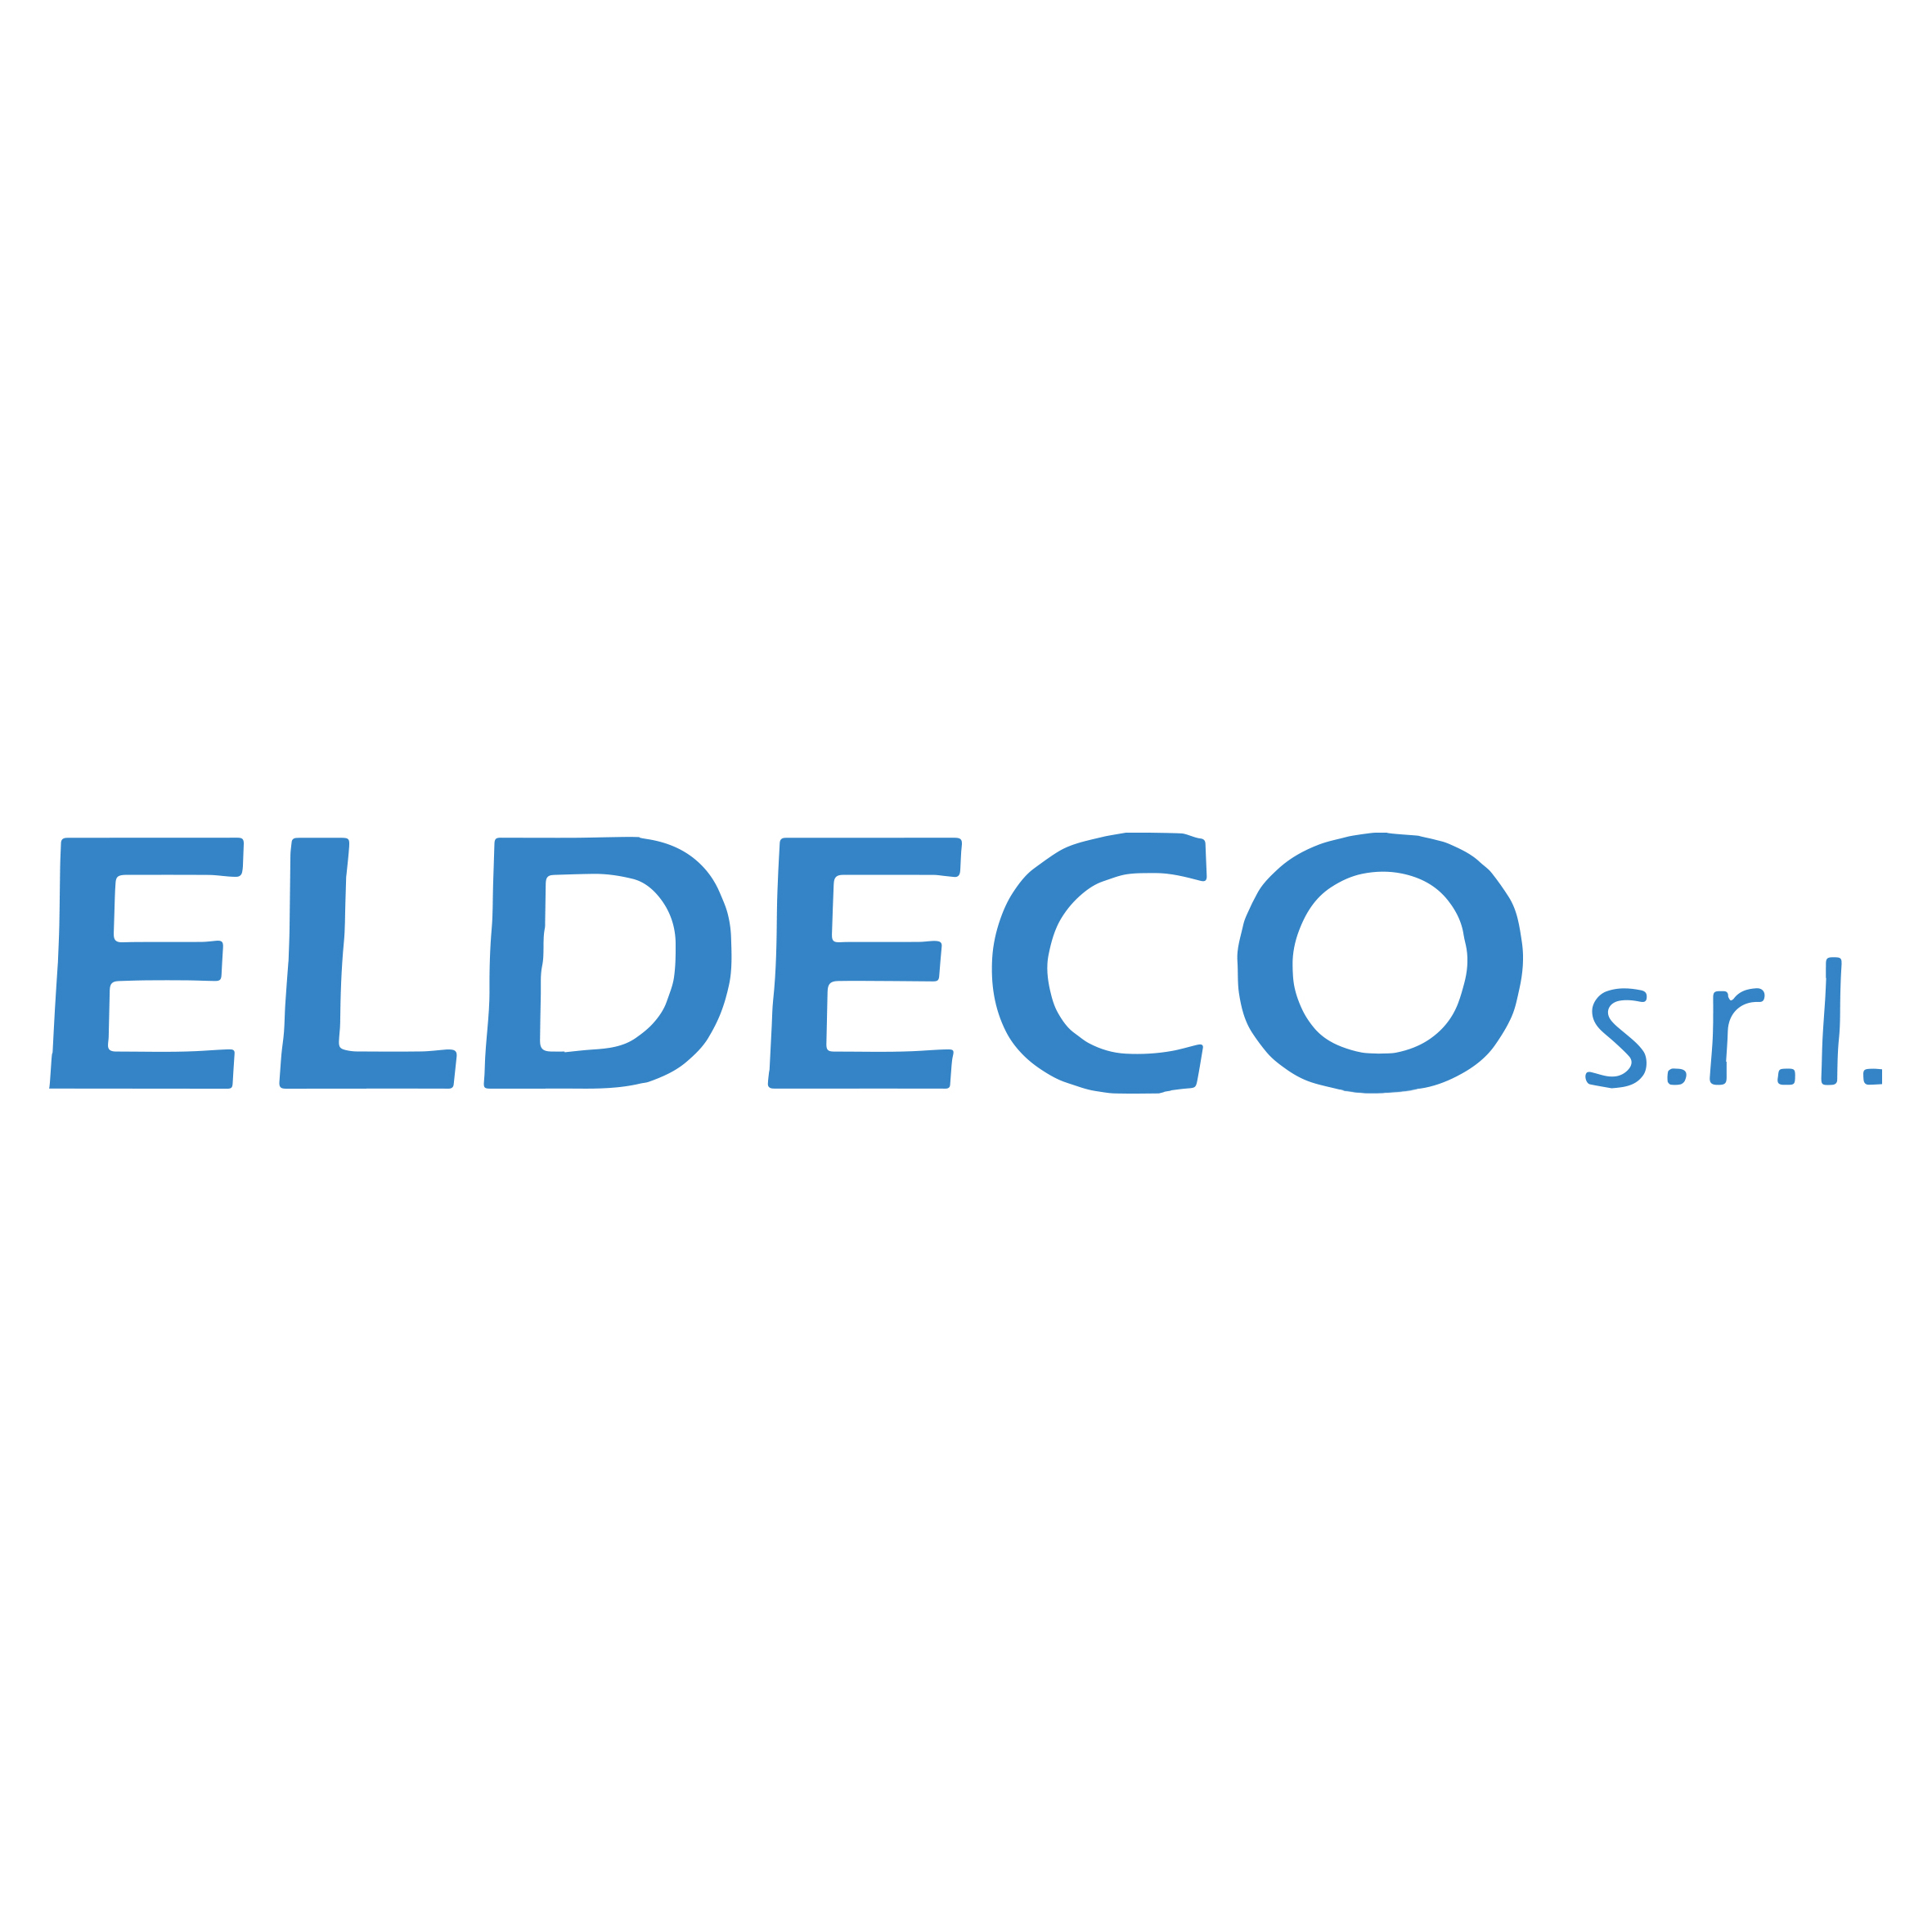 eldeco group on Behance